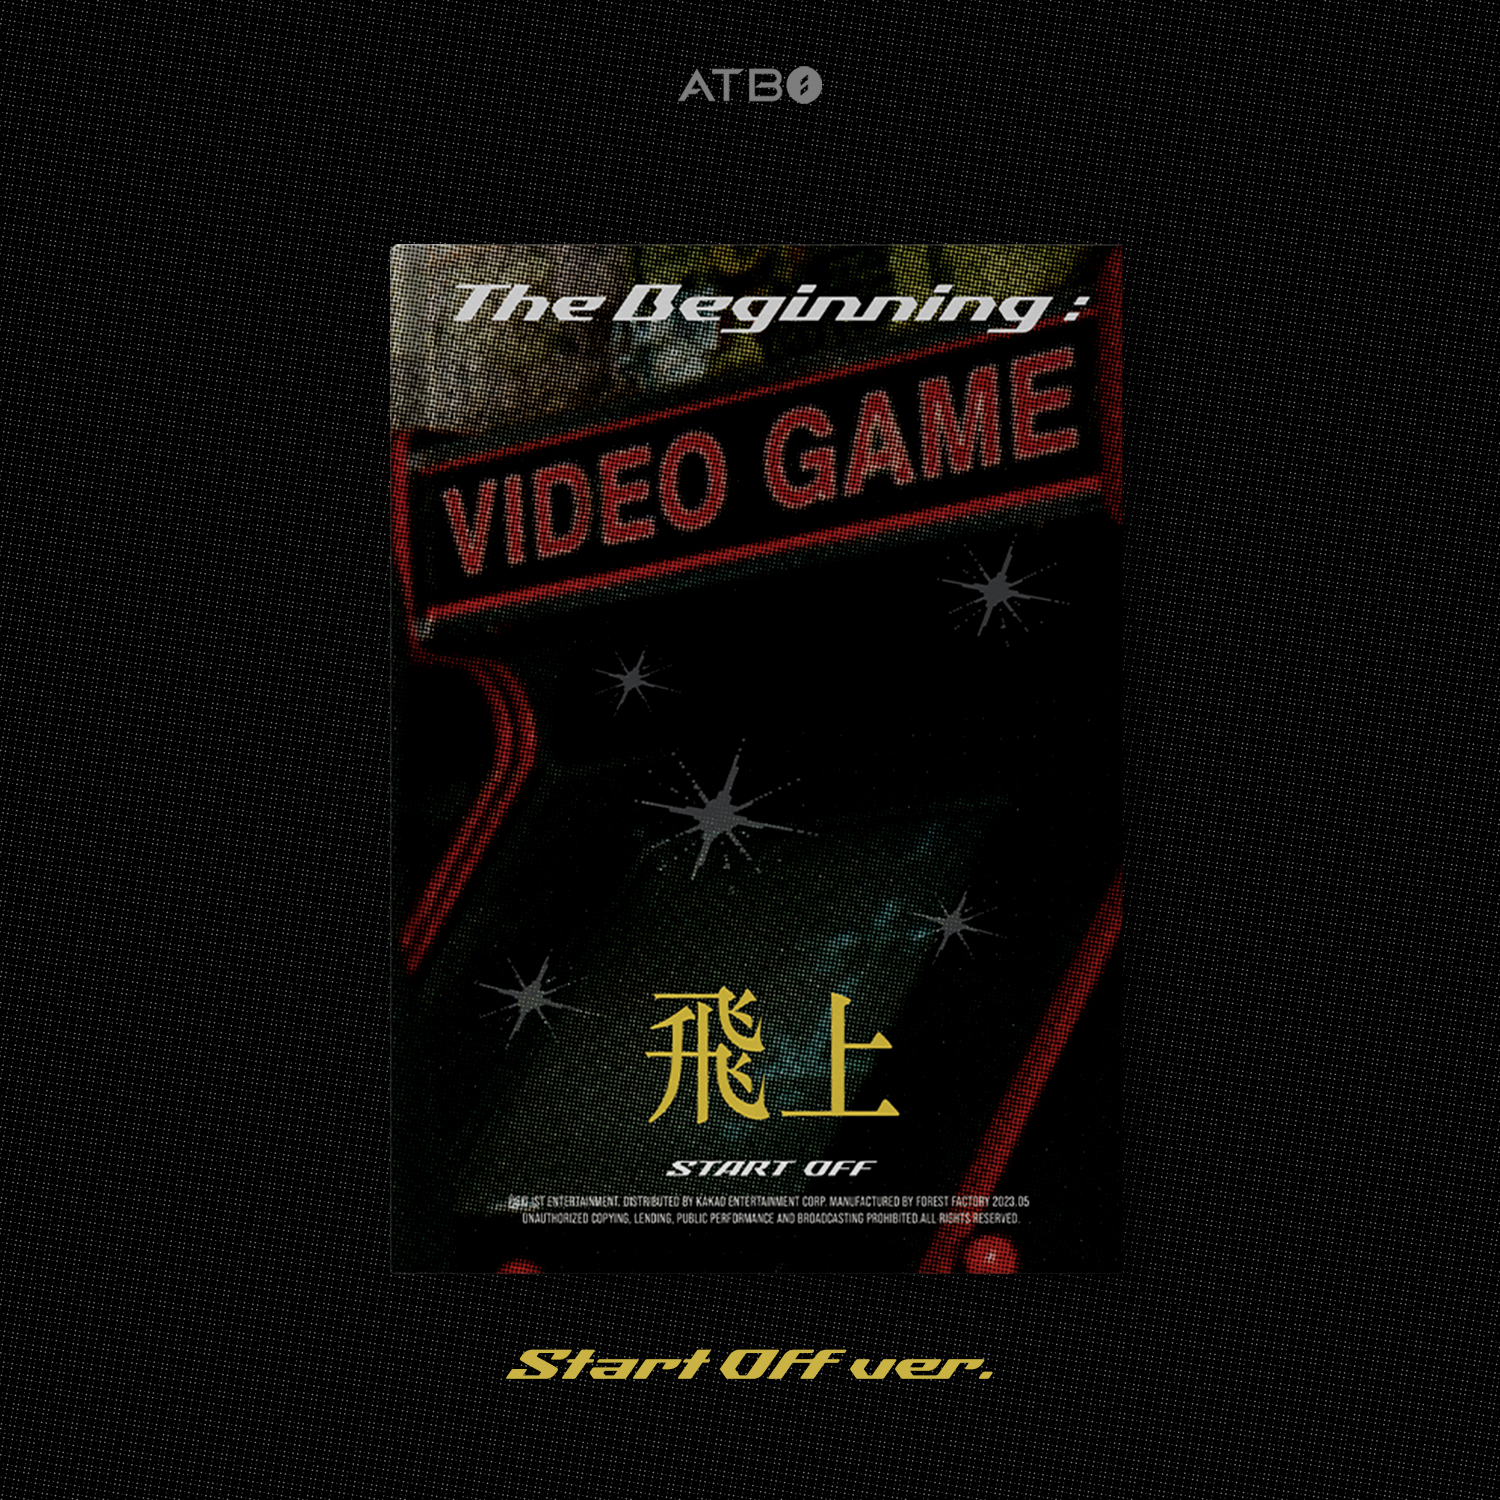 ATBO - ミニアルバム3集 [The Beginning : 飛上] (Start Off Ver.)